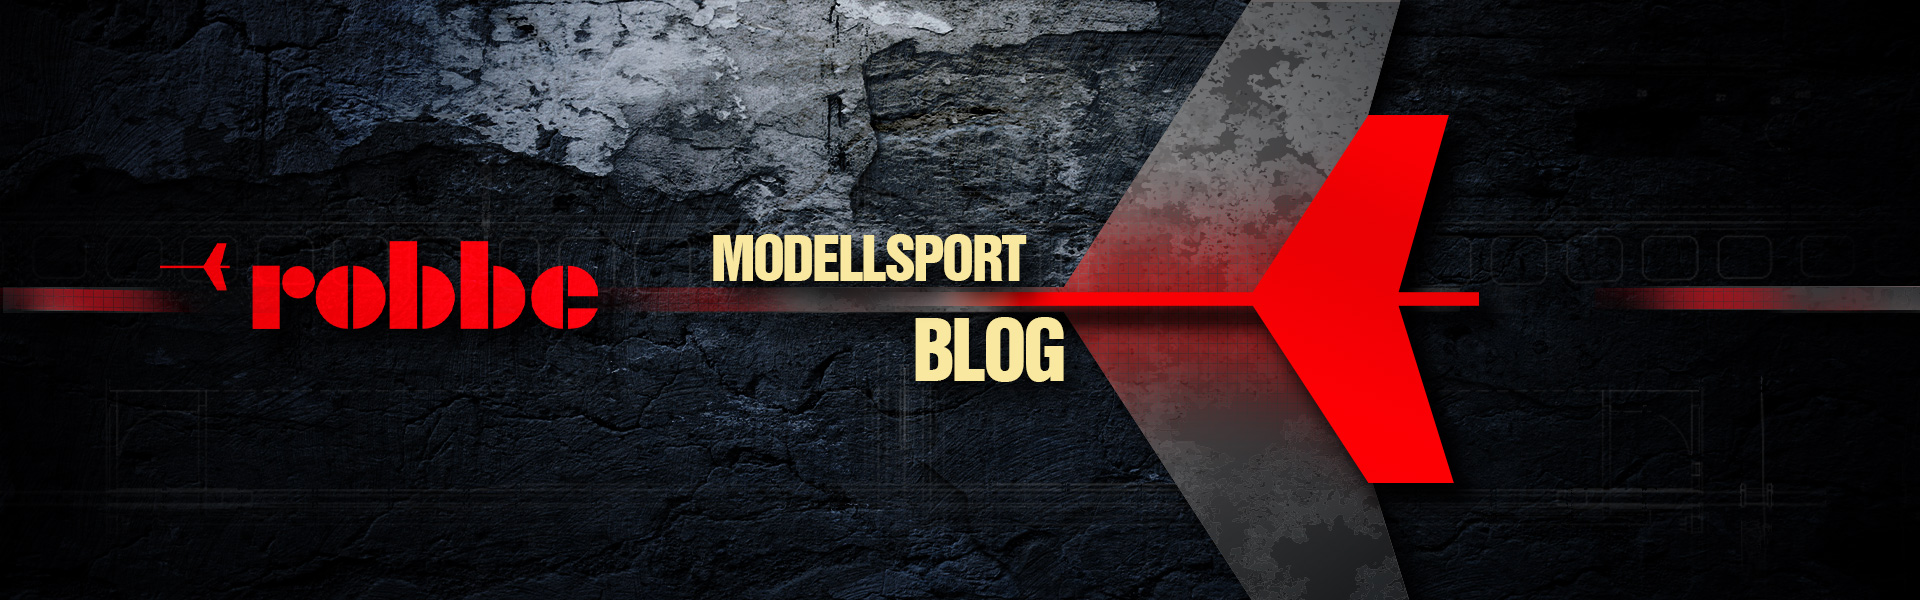 Robbe Modellsport RC Blog